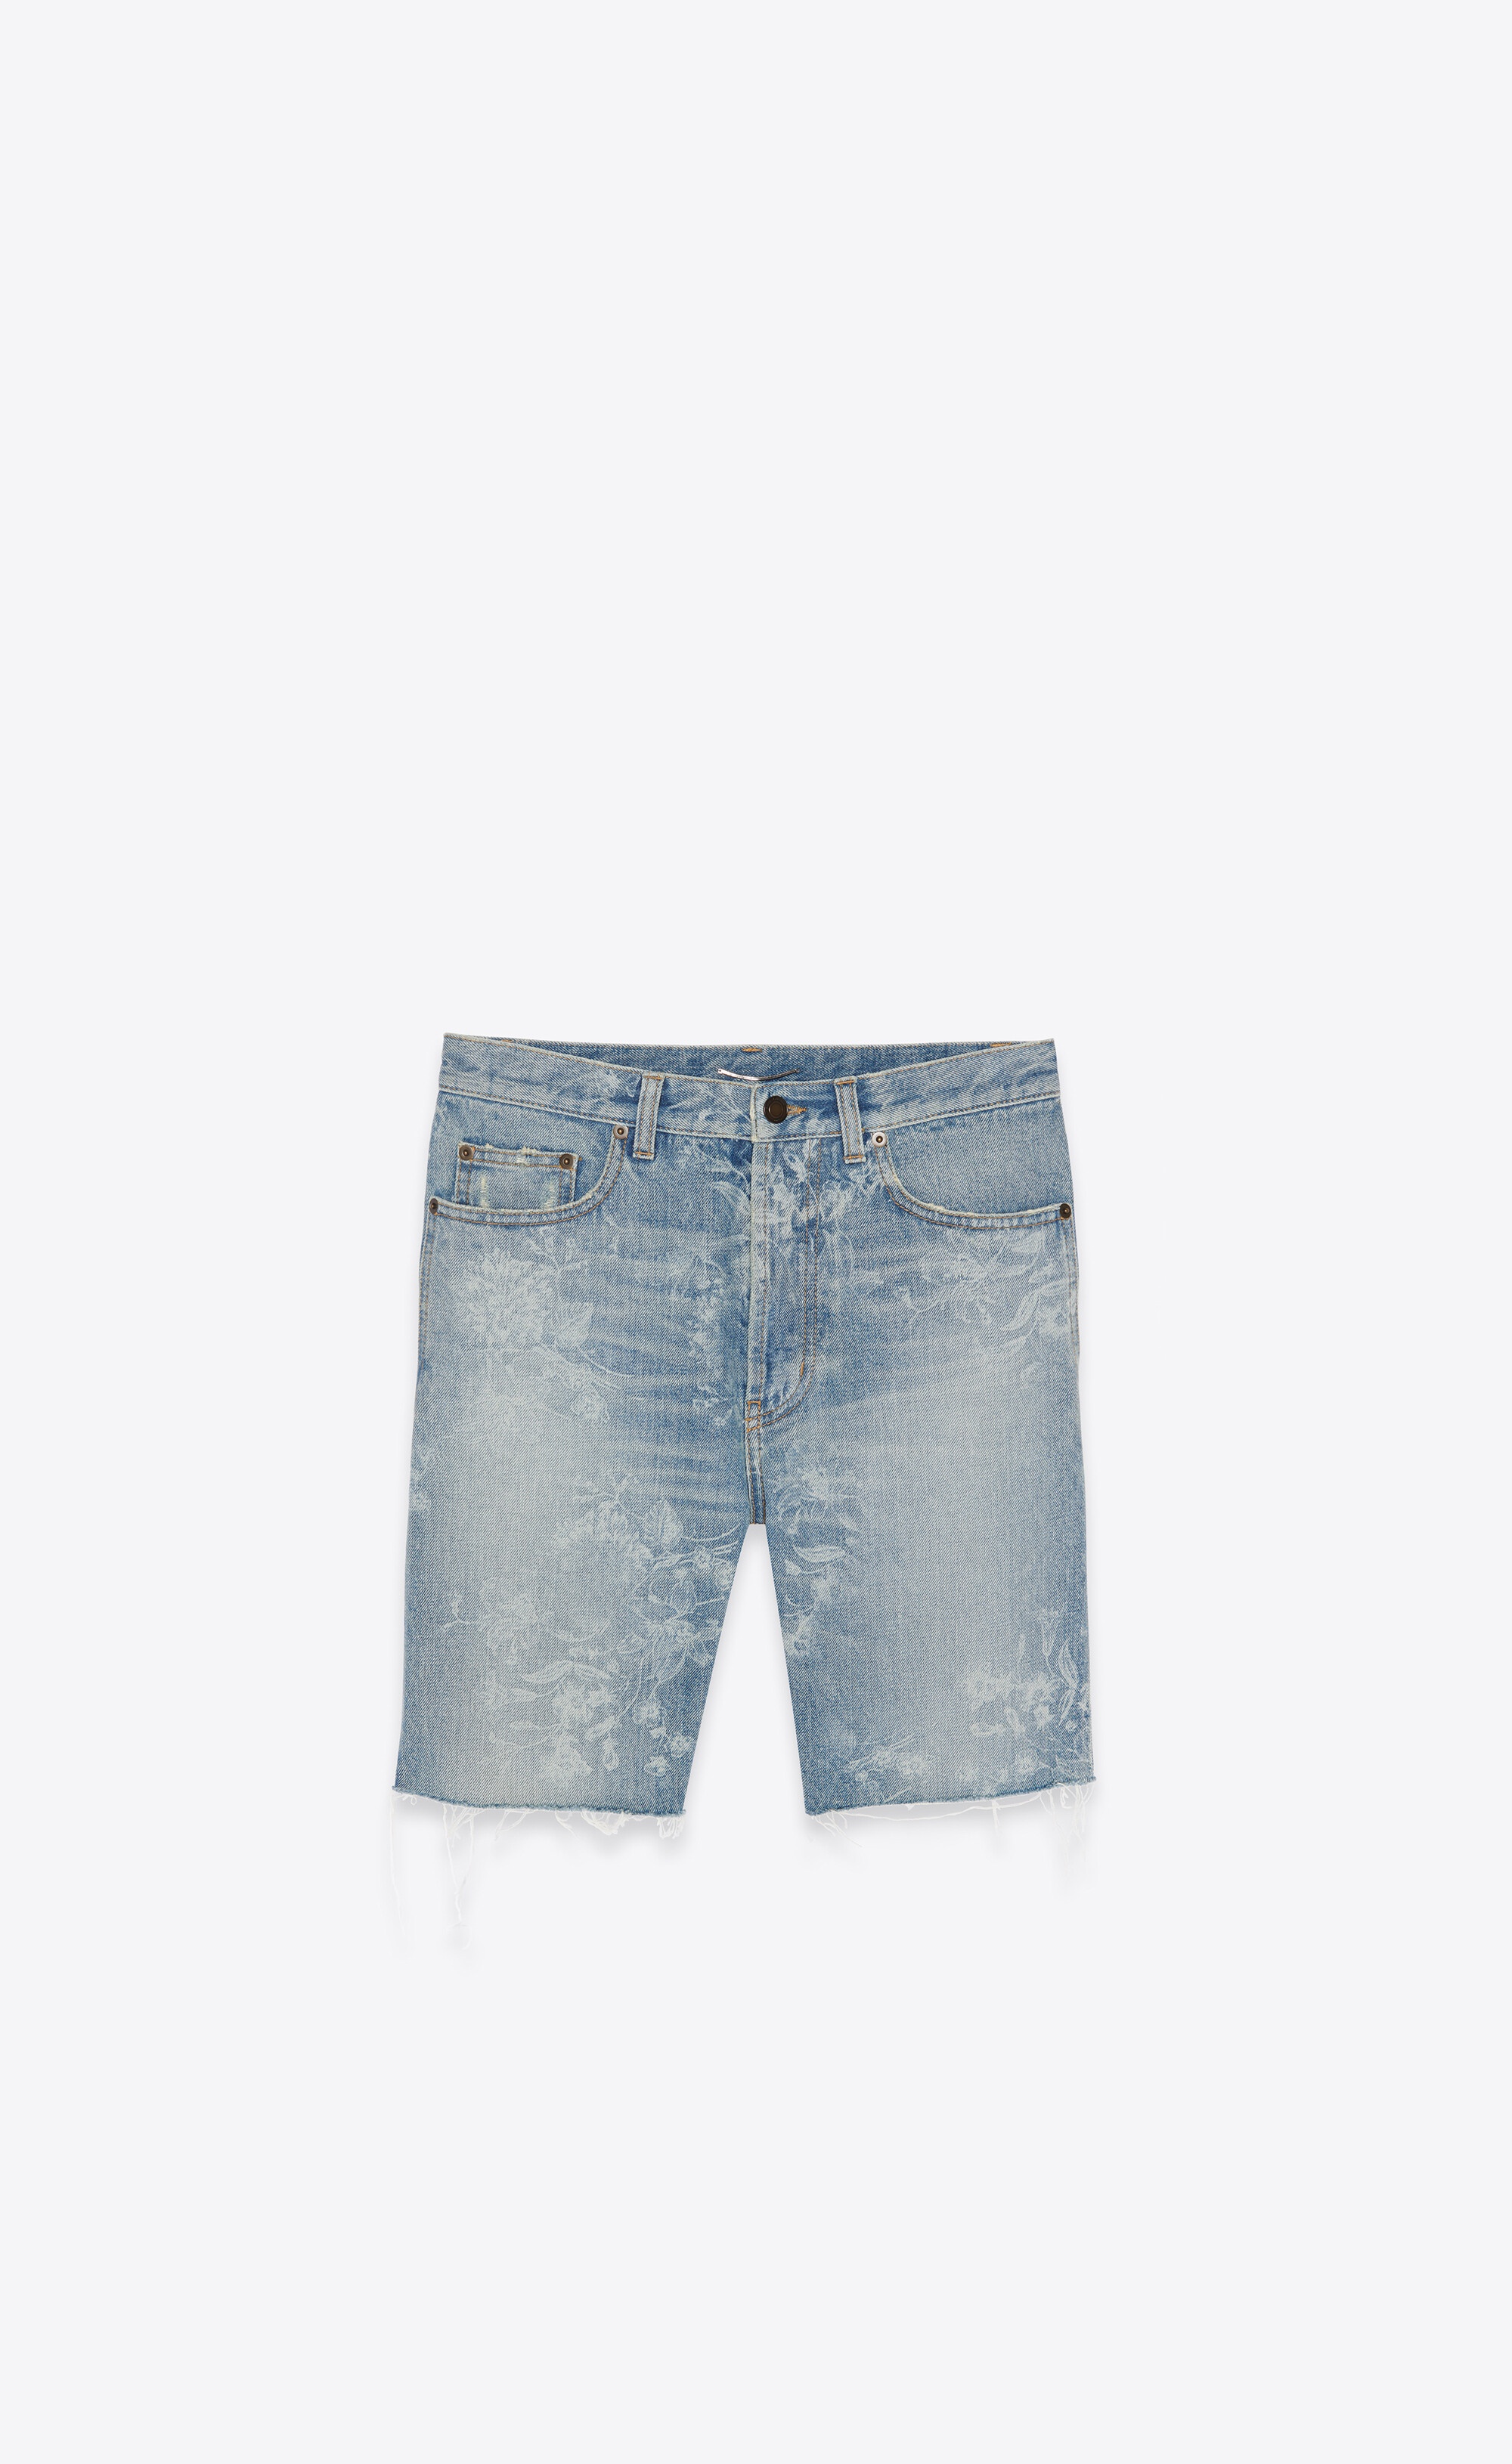 shorts in florida blue flower printed denim - 1